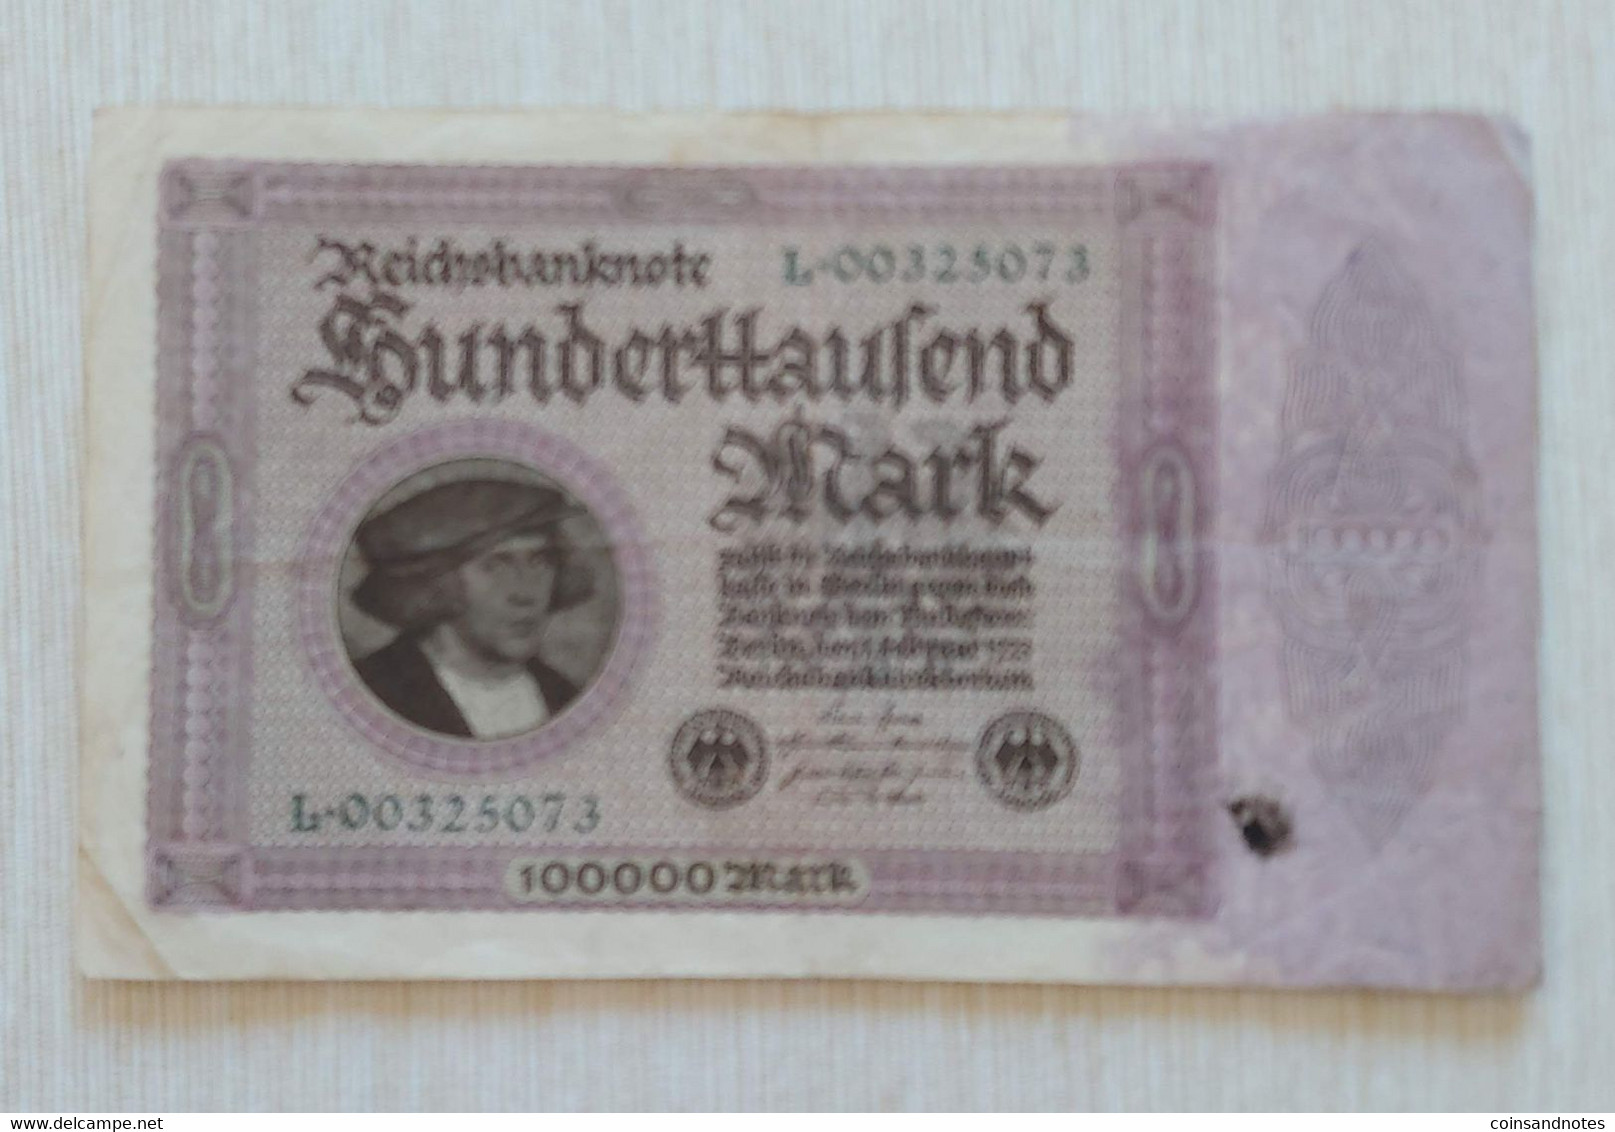 Germany 1923 - 100 000 Mark Reichsbanknote - No L.00325073 - P# 83a - VF - 100.000 Mark